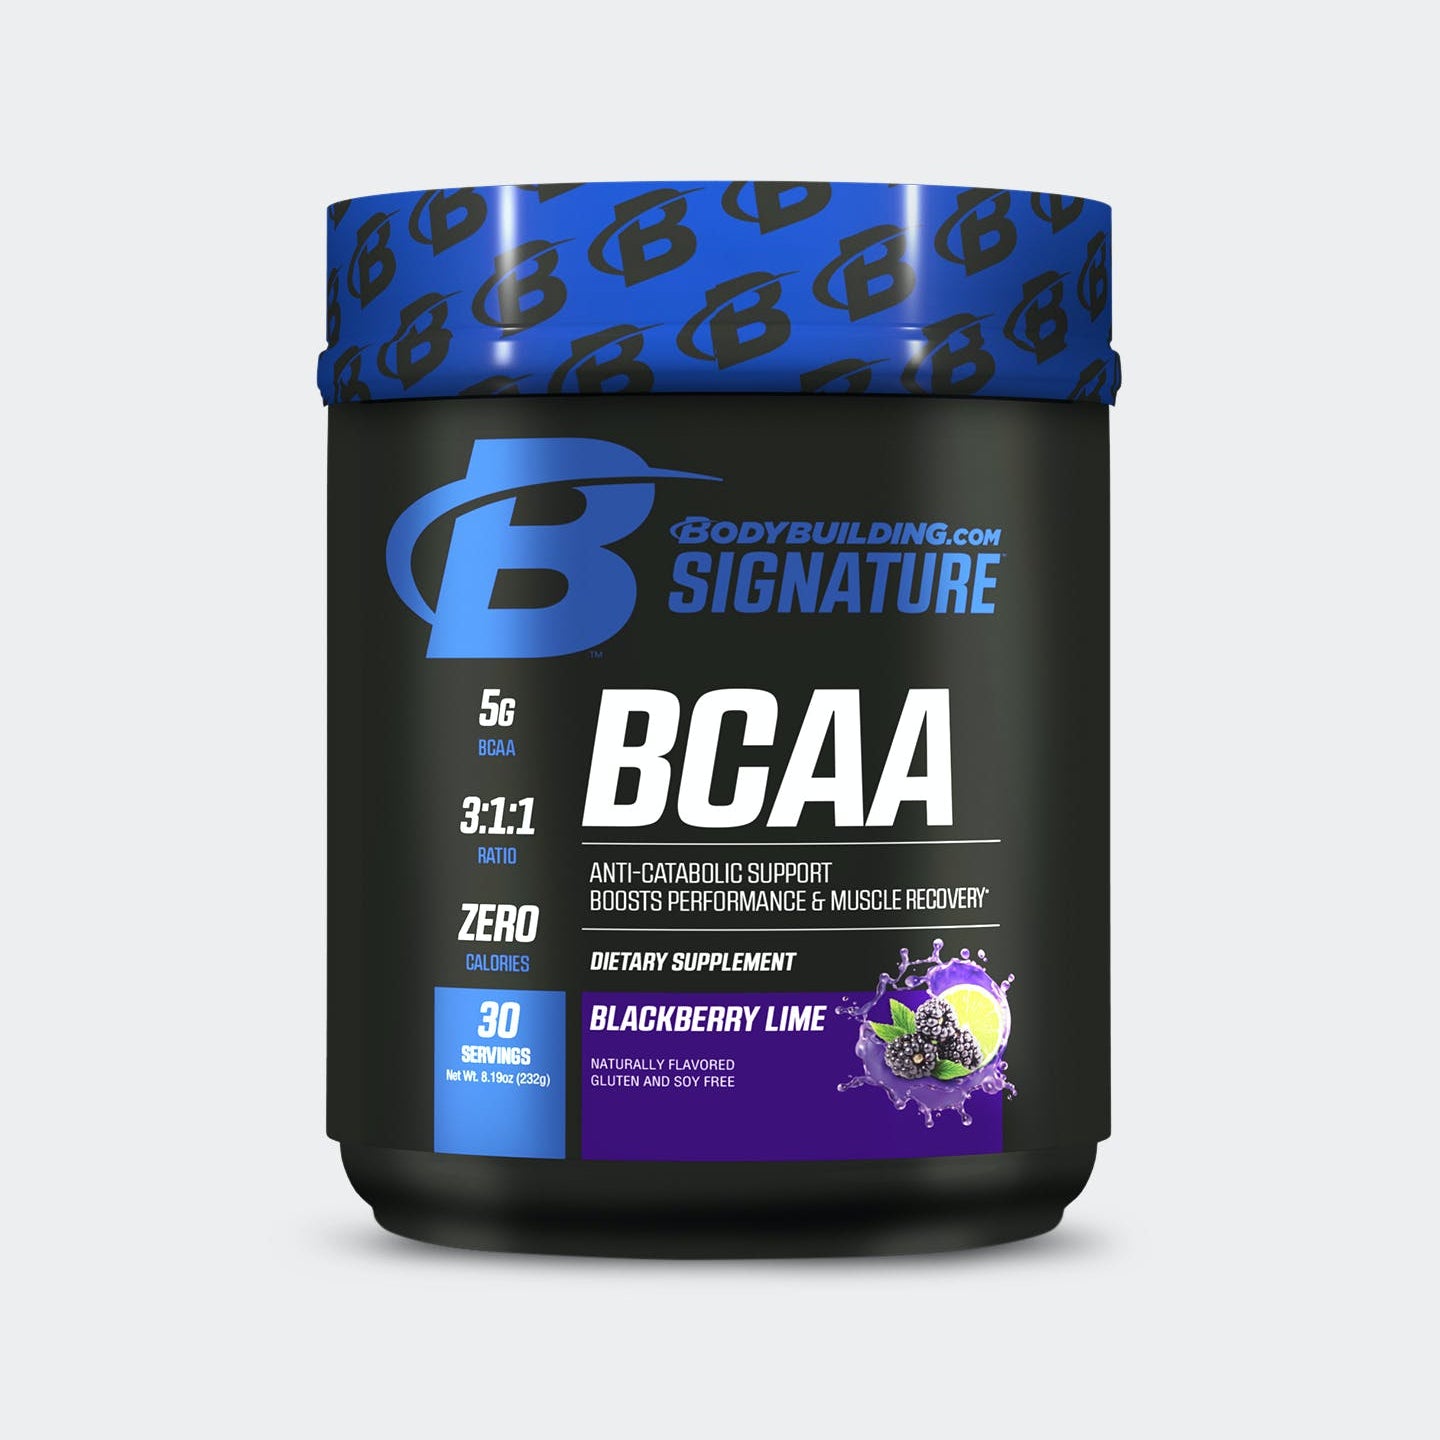 Bodybuilding.com Signature Signature BCAA, Blackberry Lime, 30 Servings